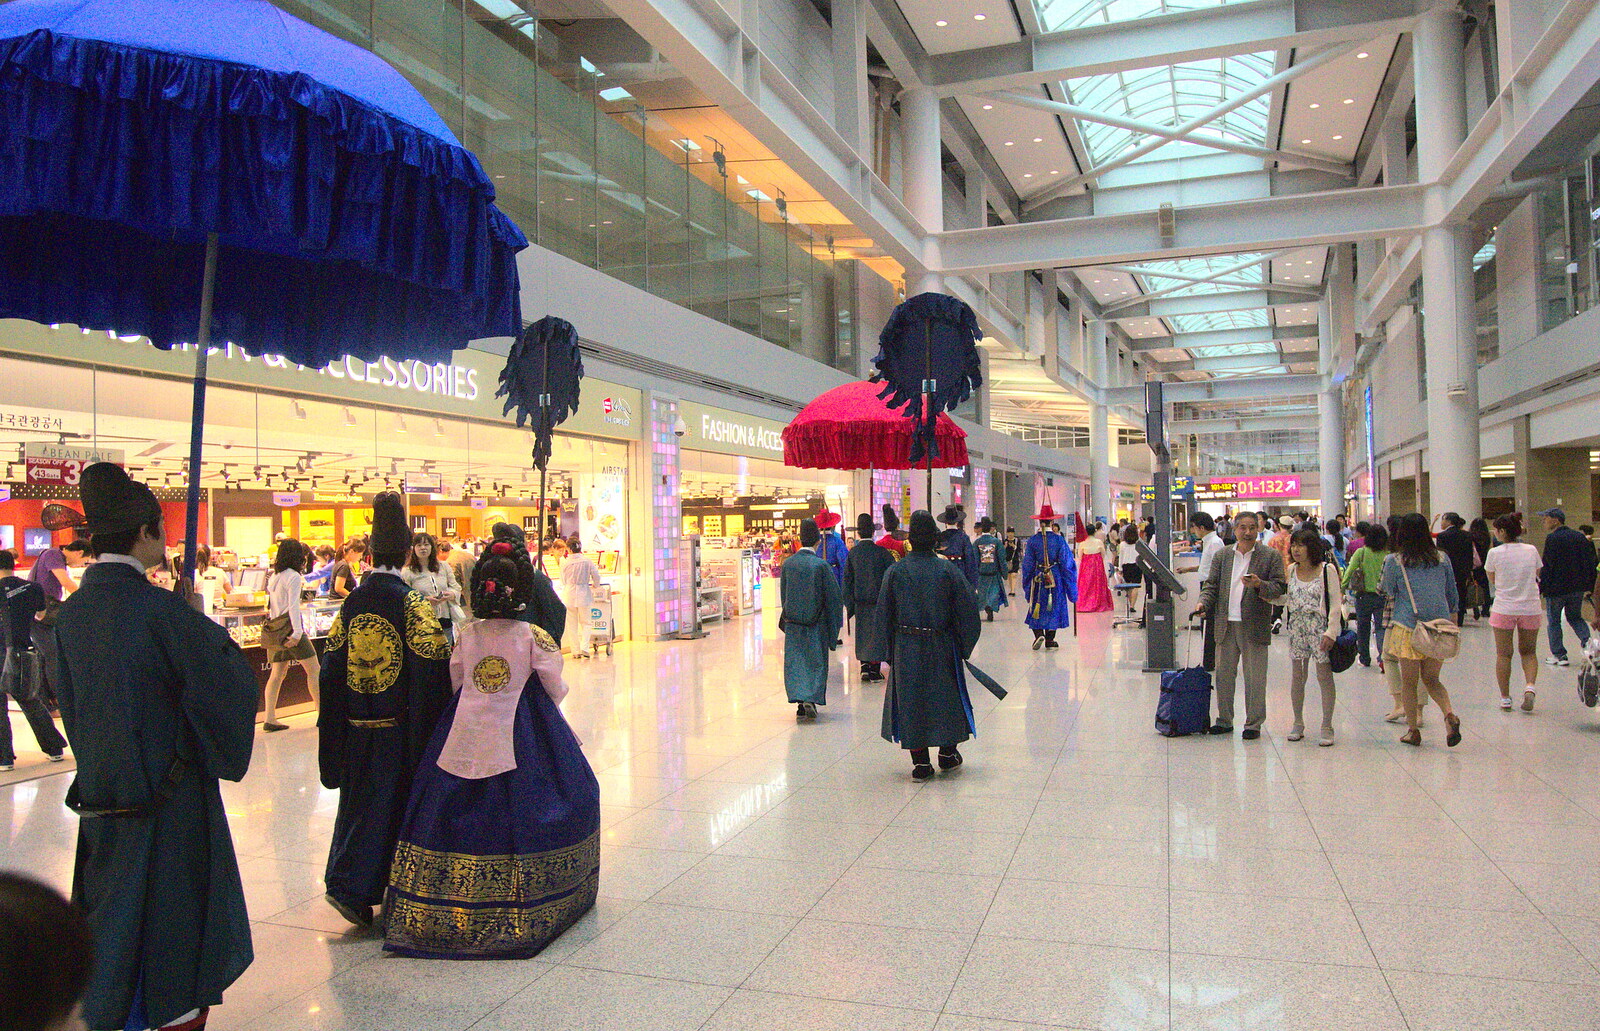 The entourage moves off through the airport from Seomun Market, Daegu, South Korea - 1st July 2012